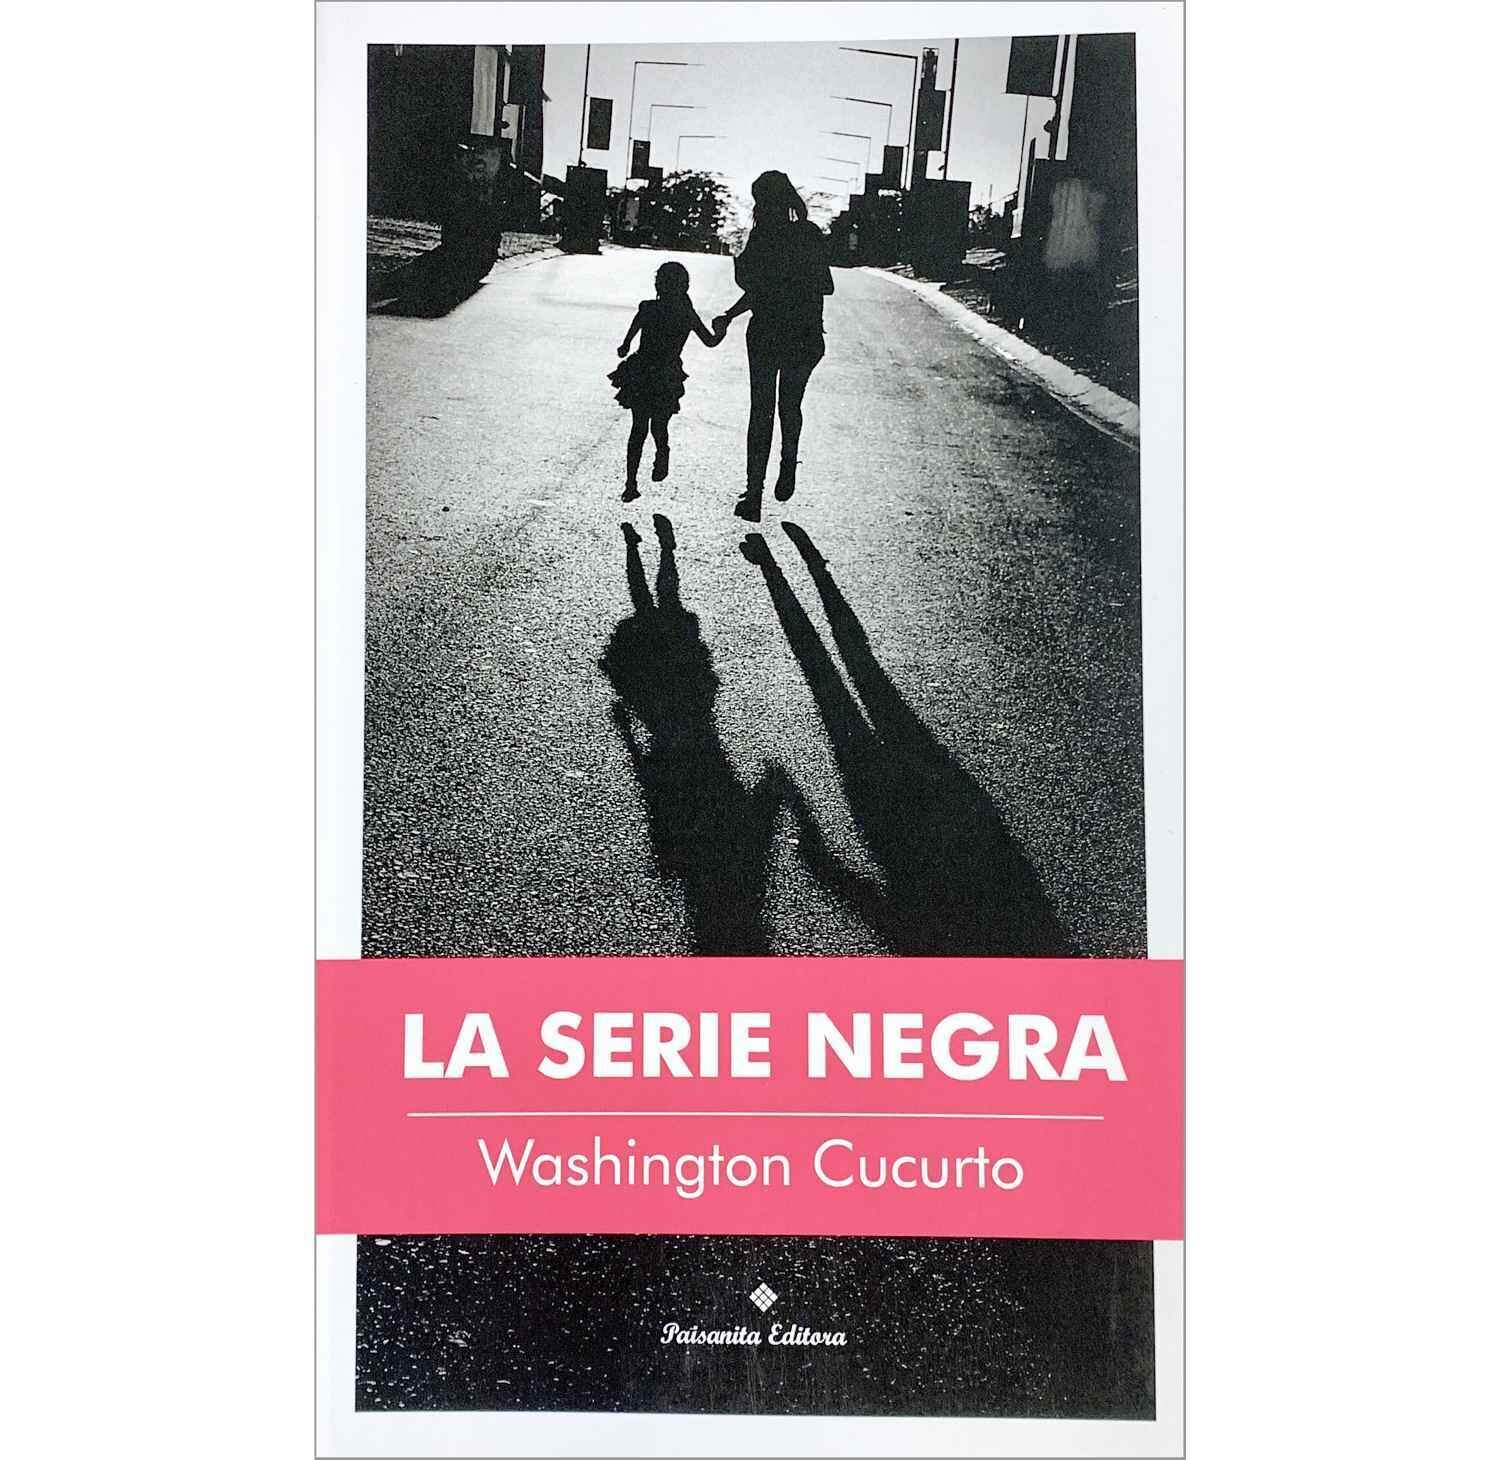 La serie negra by Washington Cucurto - Spanish edition